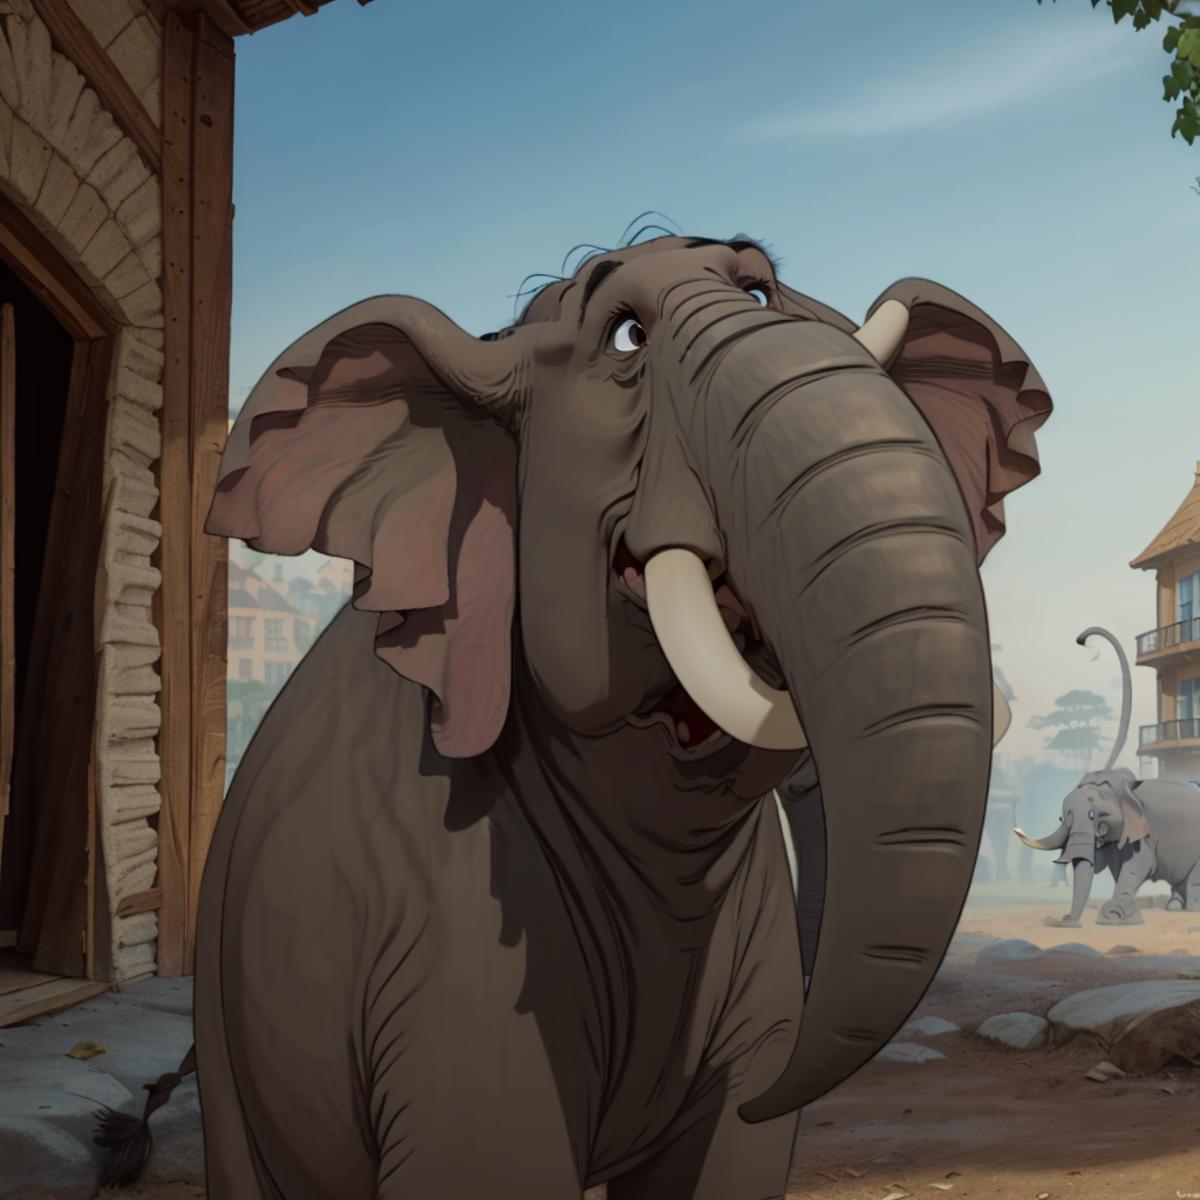 Disney elephant image by alfonzredeker588